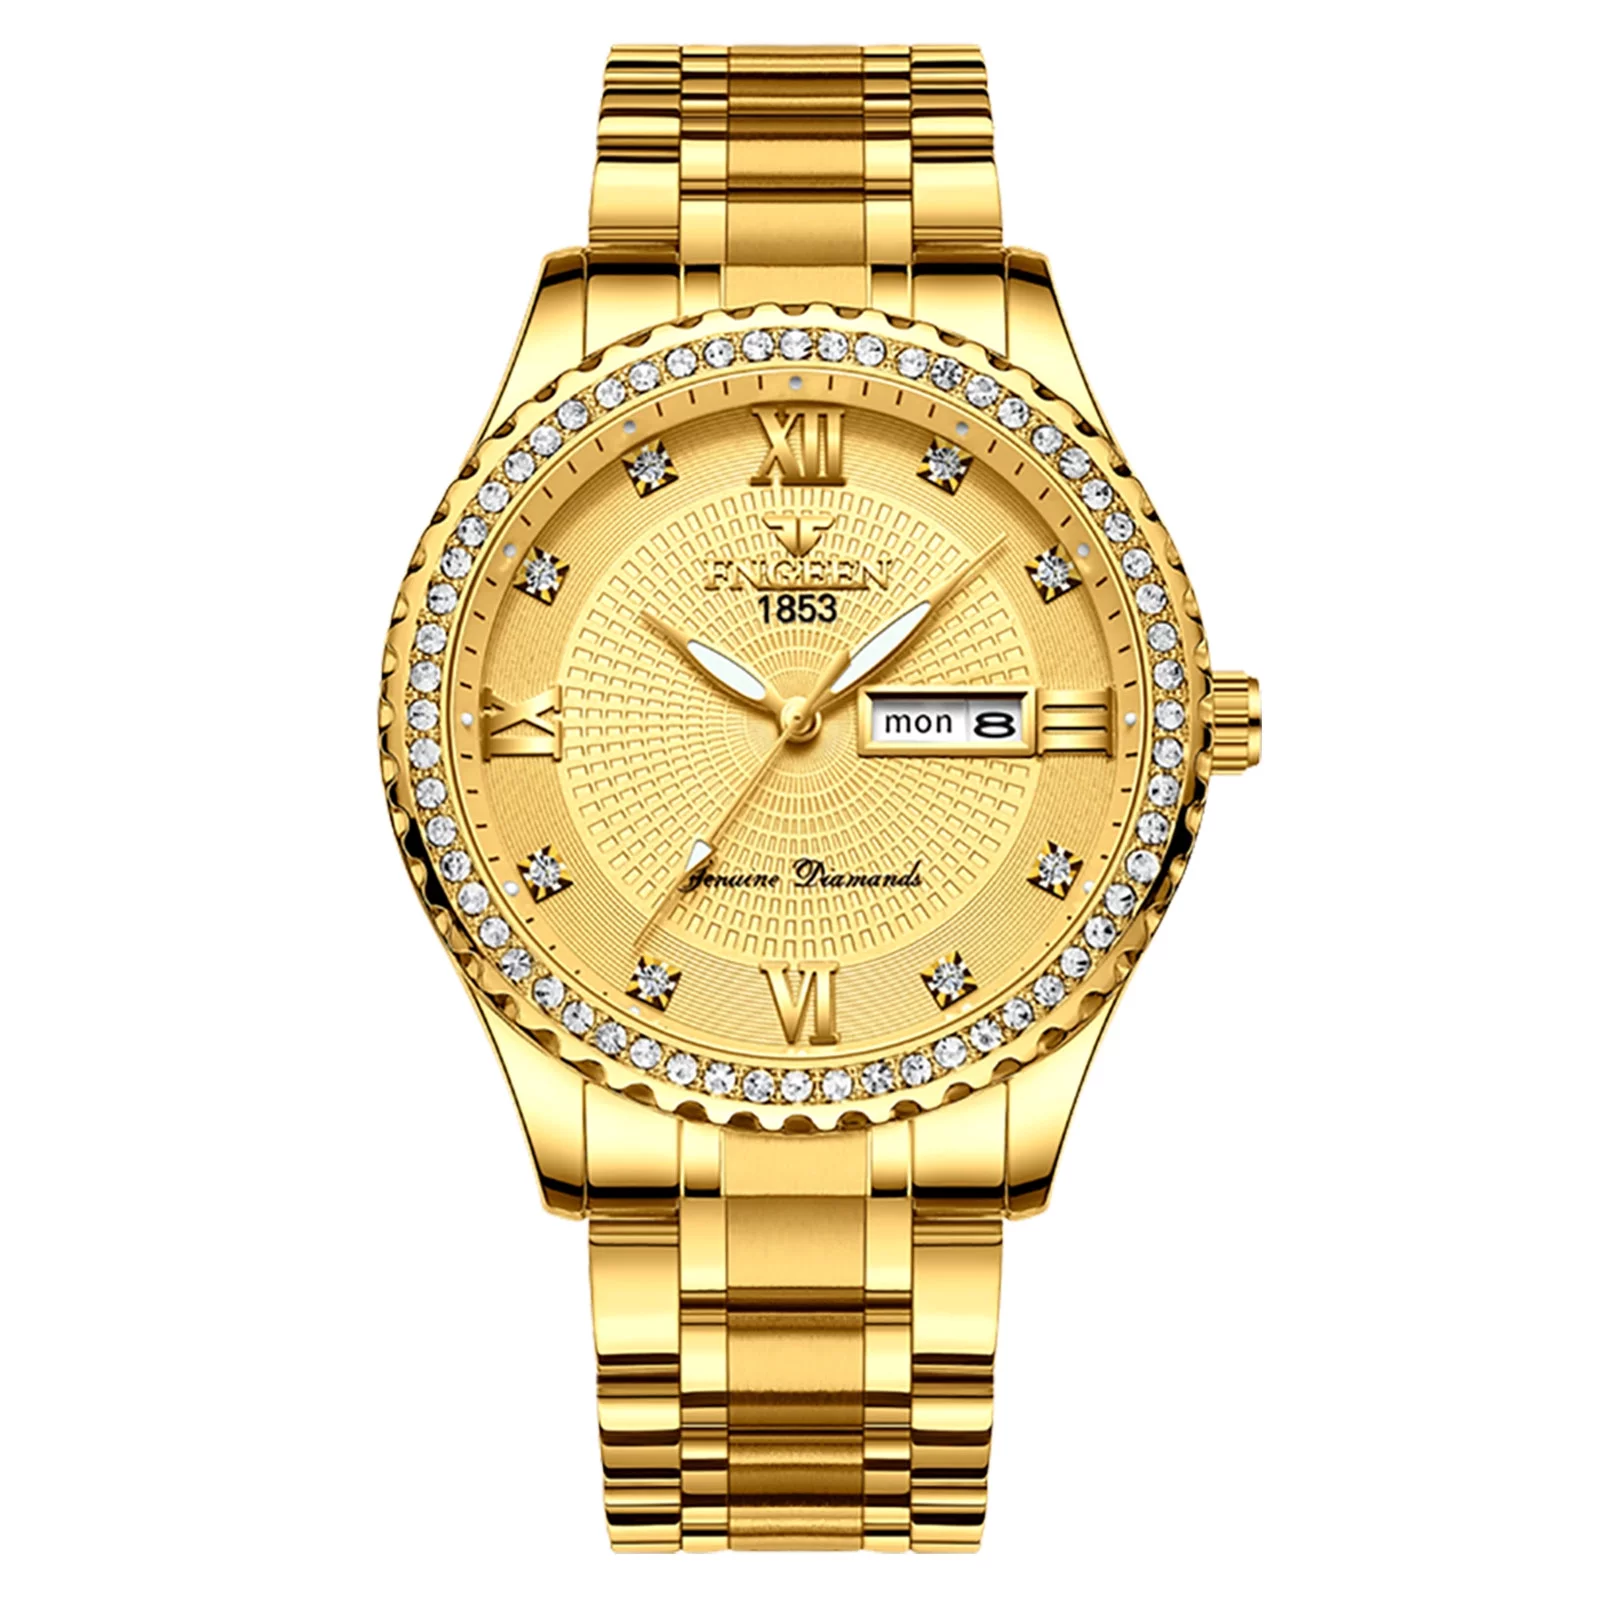 EEEkit Classic Diamond Gold Watches for Men, Stainless Steel Waterproof Dress Watch, Men's Quartz Analog Wristwatch